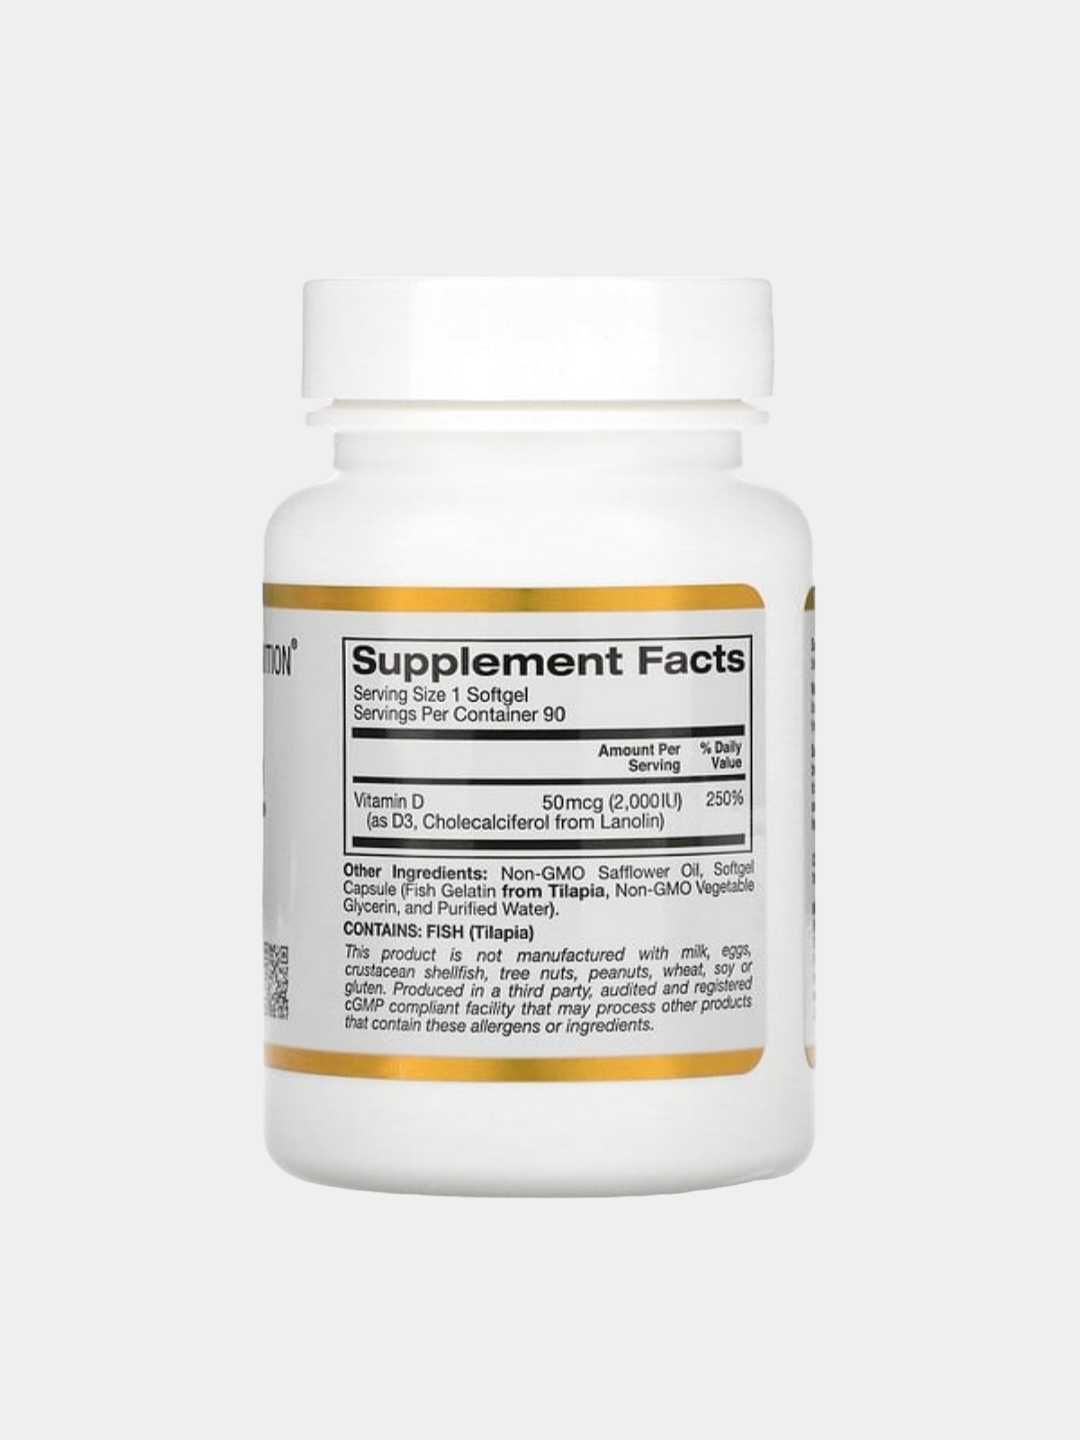 Витамин D3, California Gold Nutrition, 50 мкг (2000 МЕ), 90 капсул